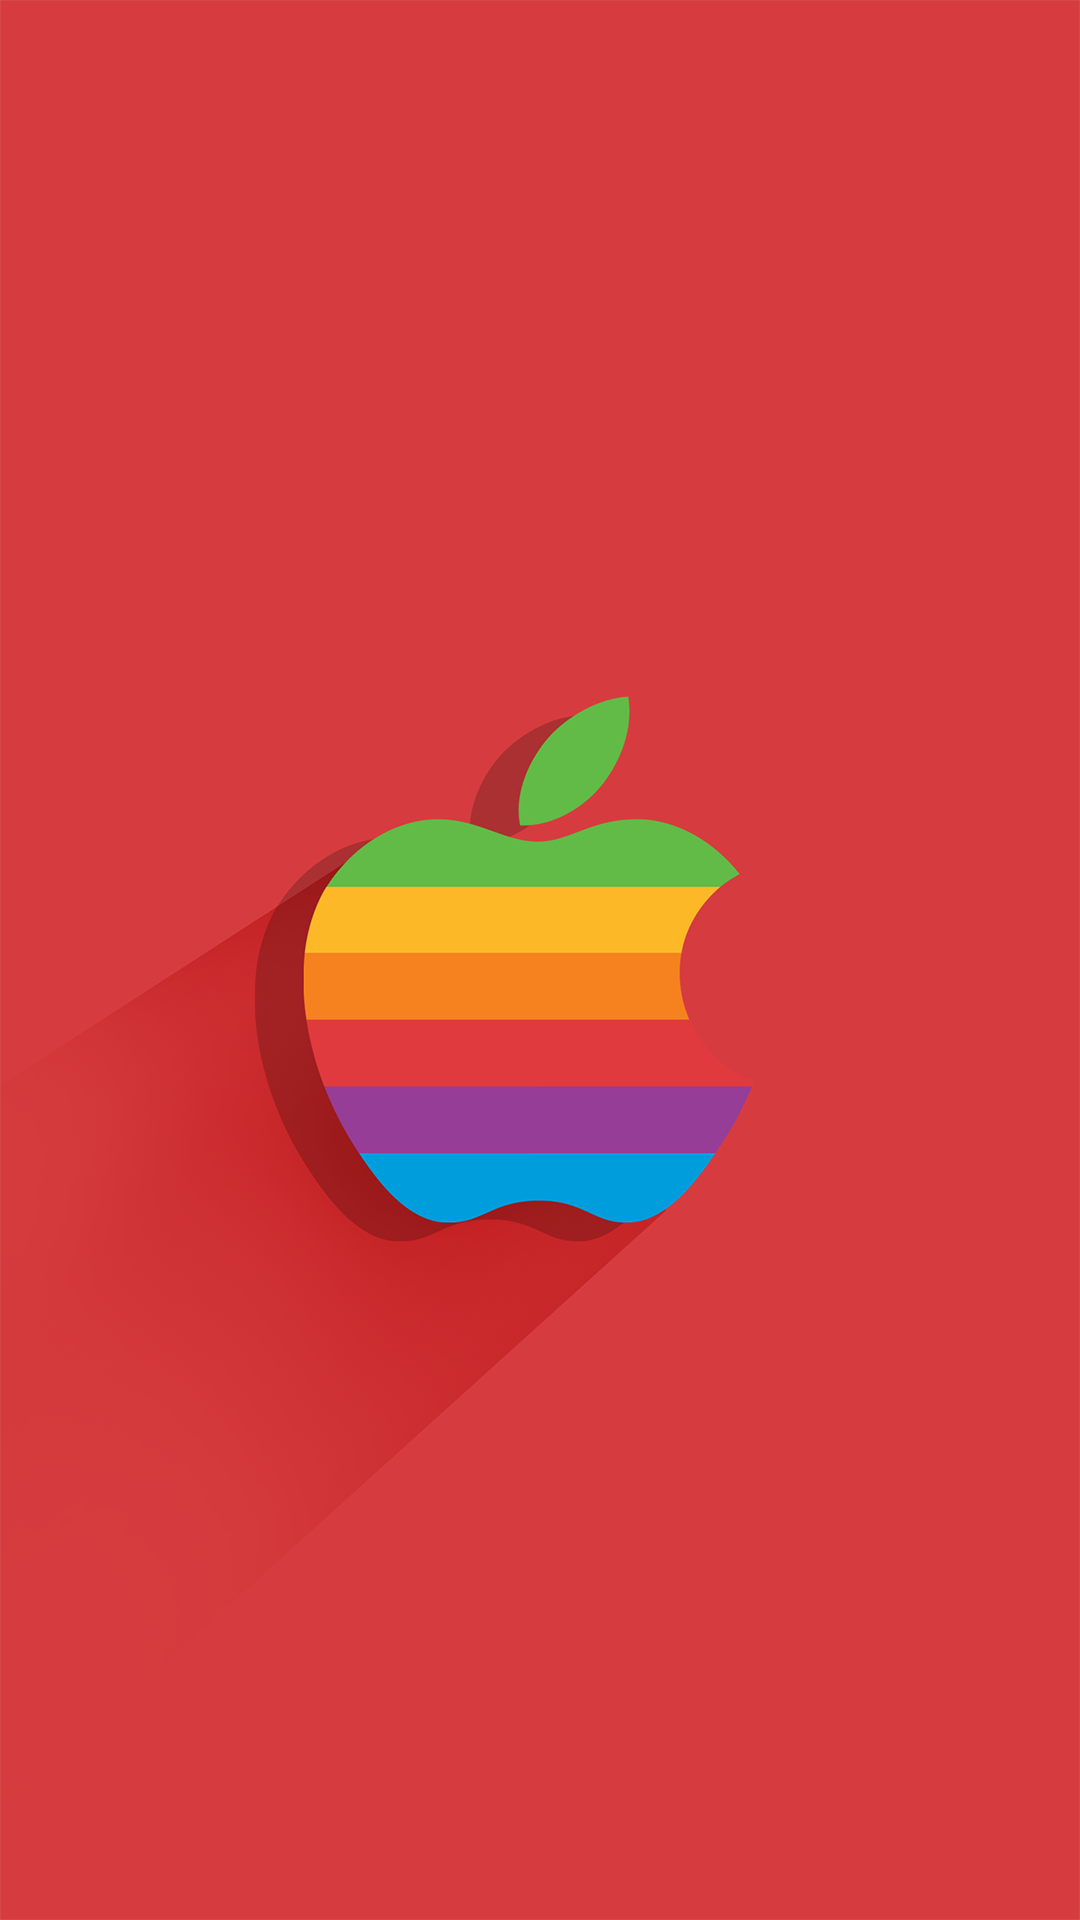 Apple logo wallpaper iphone, Apple logo wallpaper, Apple wallpaper